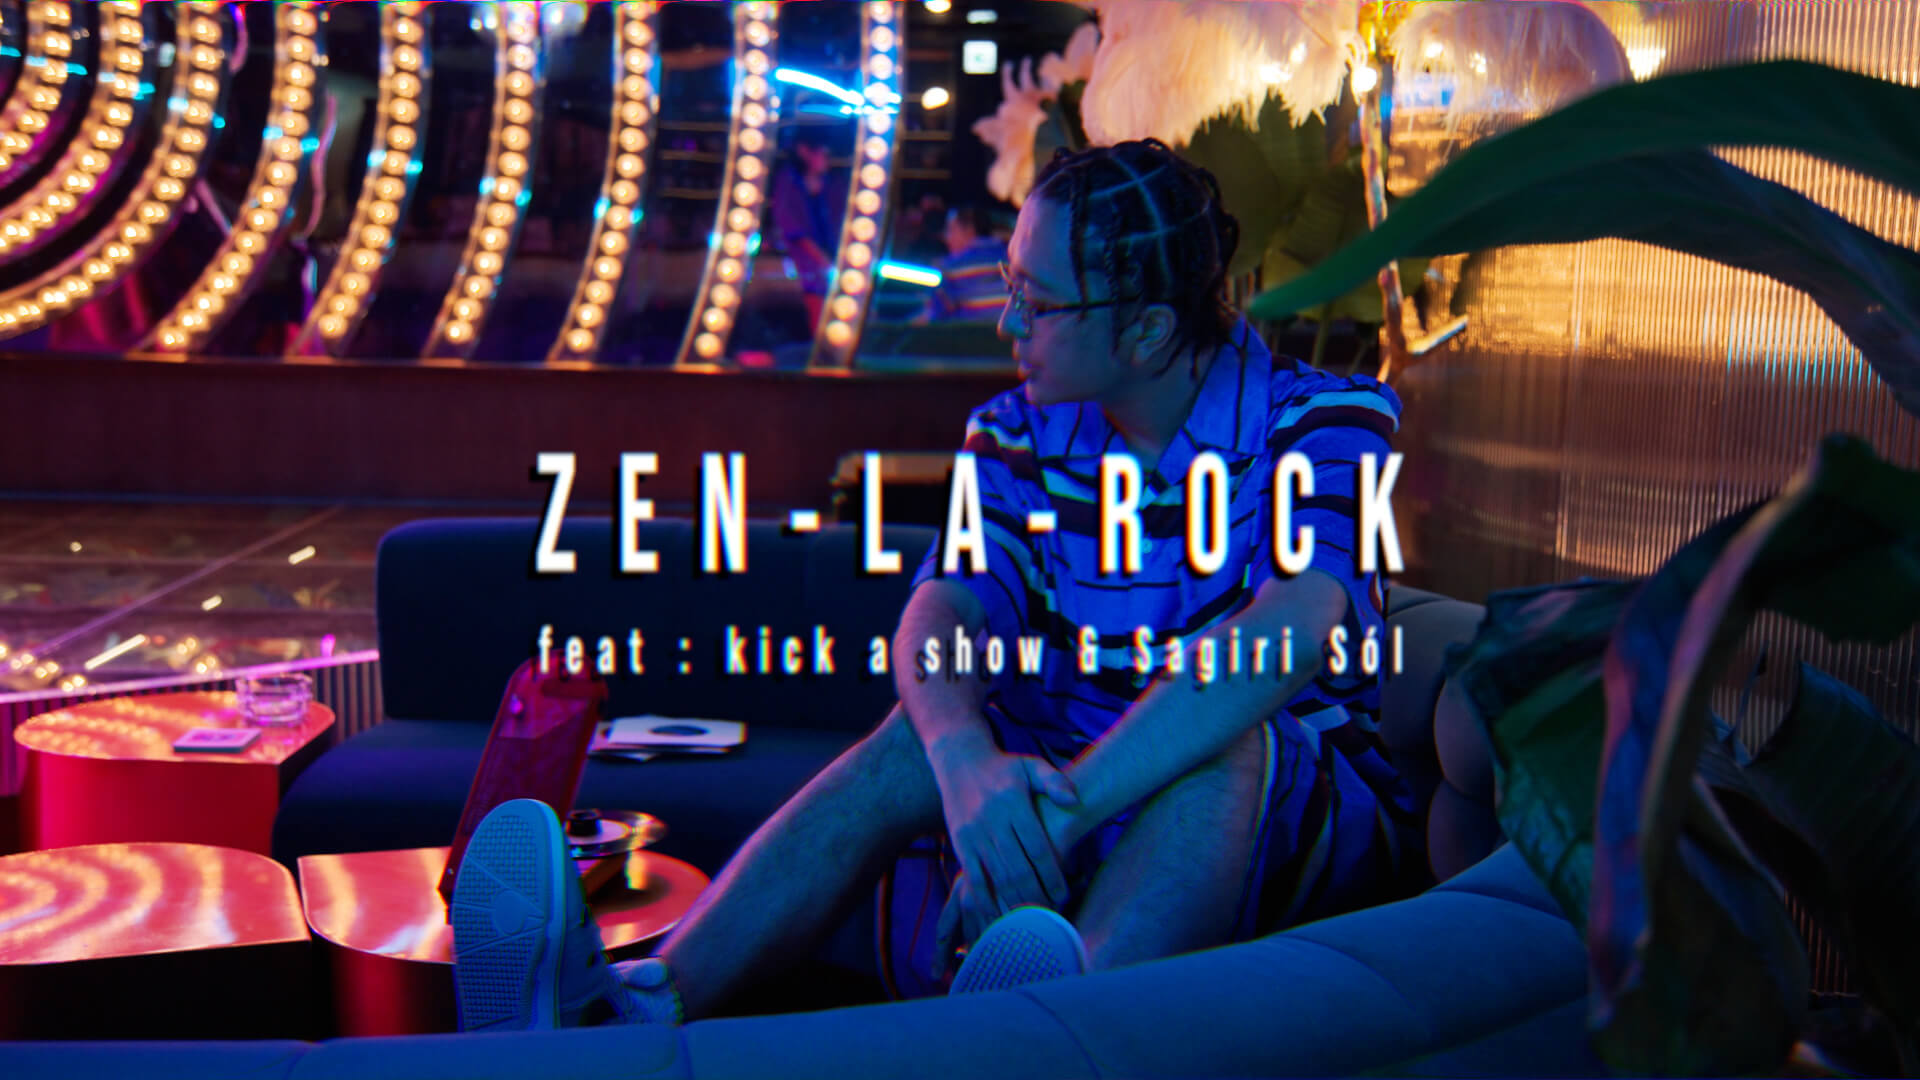 ZEN-LA-ROCK、400枚限定の7inch収録にも収録の「今夜はクラシックス」MVを公開｜grooveman Spotがプロデュース、Kick a Show、Sagiri Sól、KASHIFらも参加 music231024-zen-la-rock1